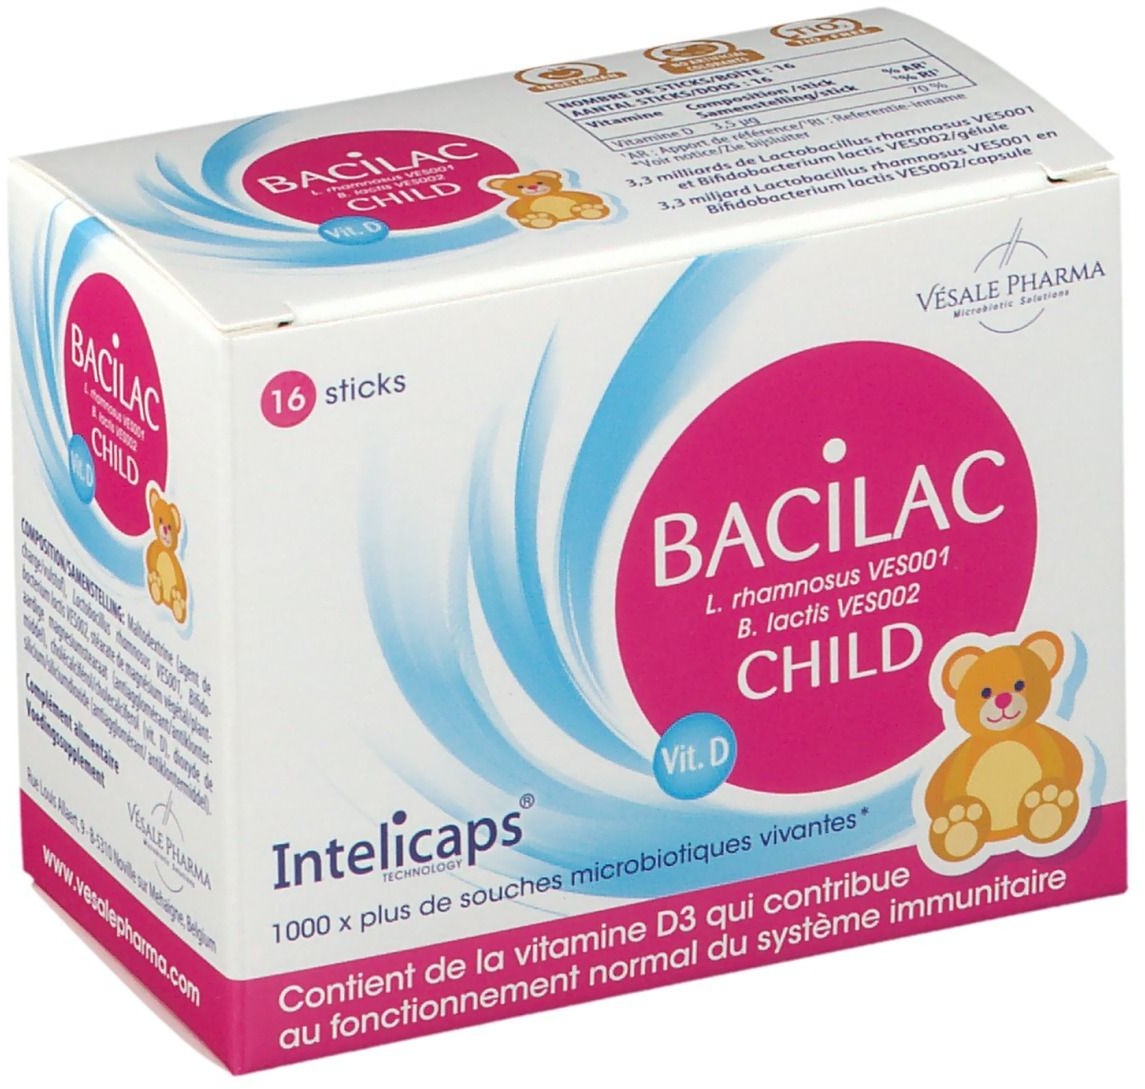 Bacilac Child